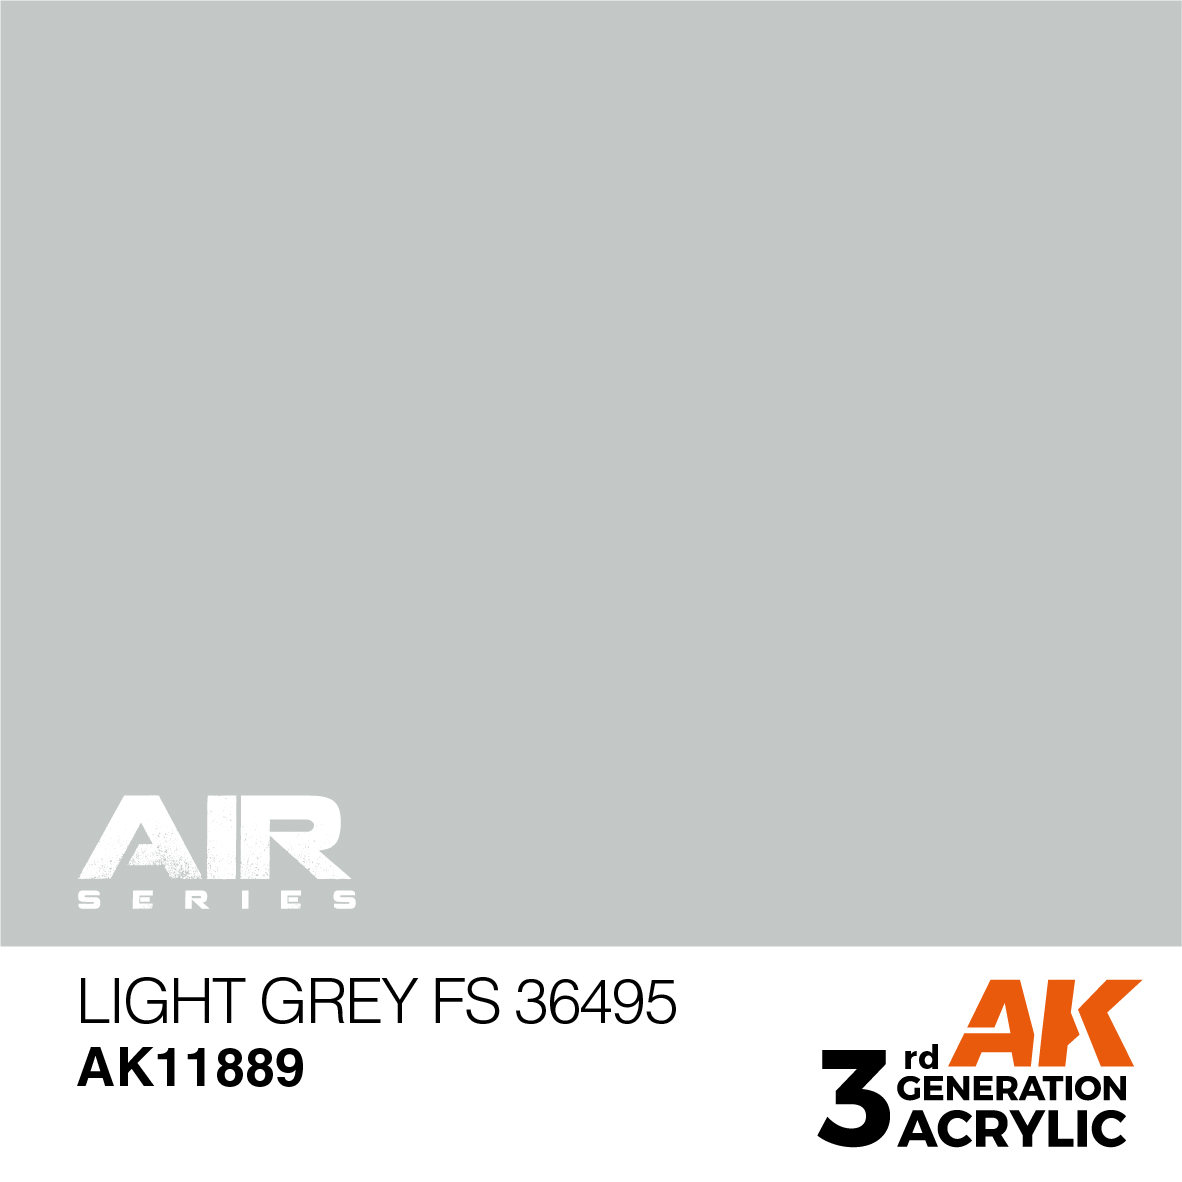 Light Grey FS 36495 – AIR